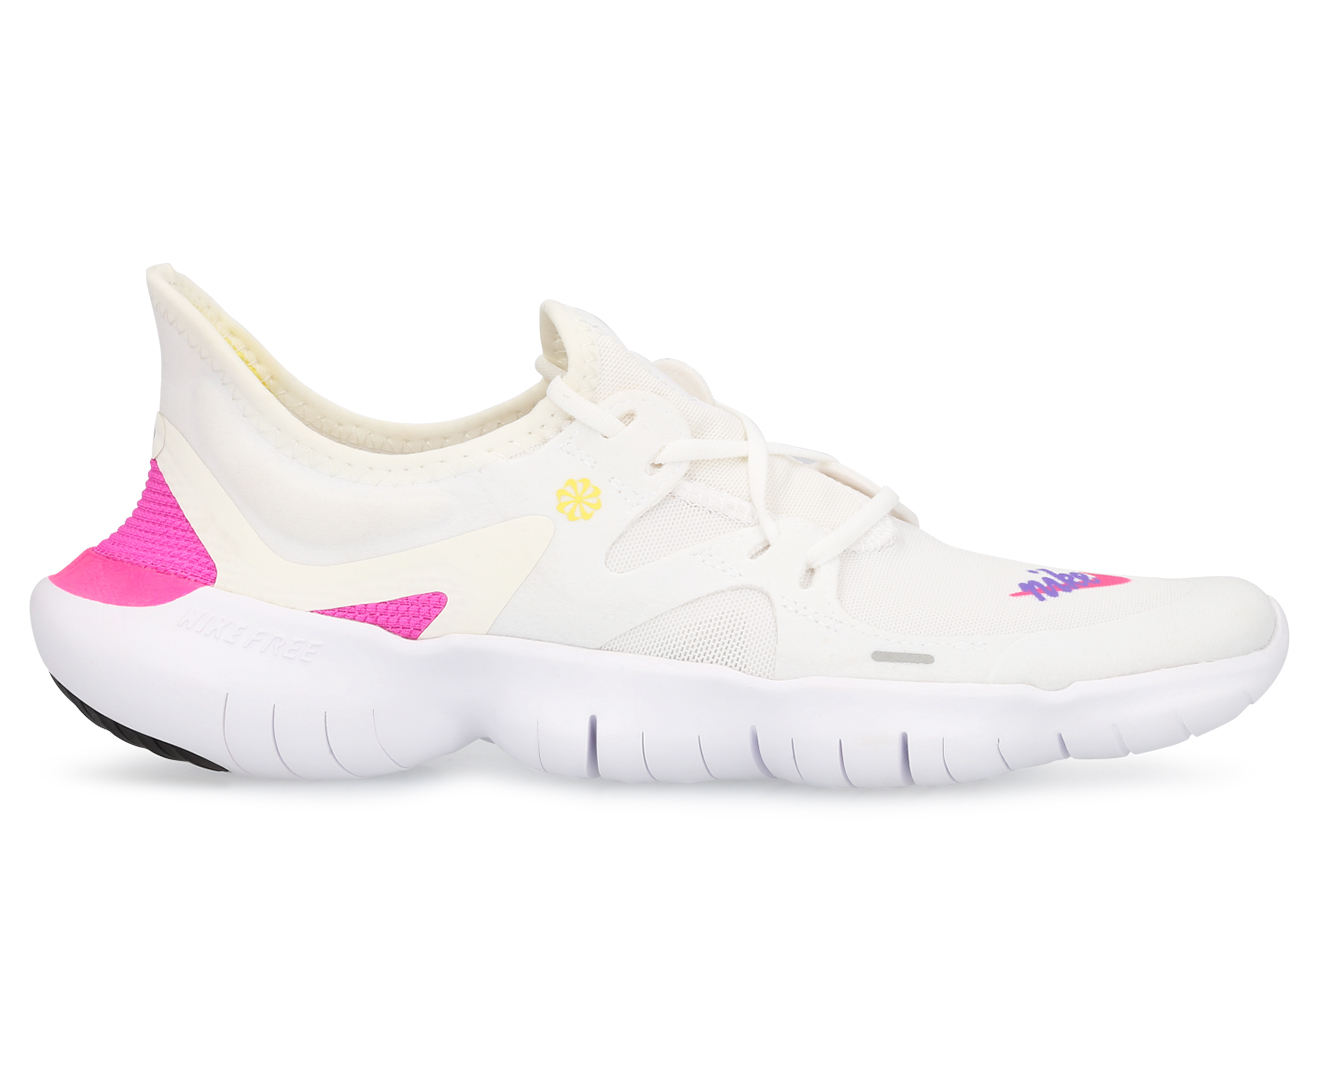 Nike Women's Free RN 5.0 Disrupt Running Shoes - White/Laser Fuchsia ...